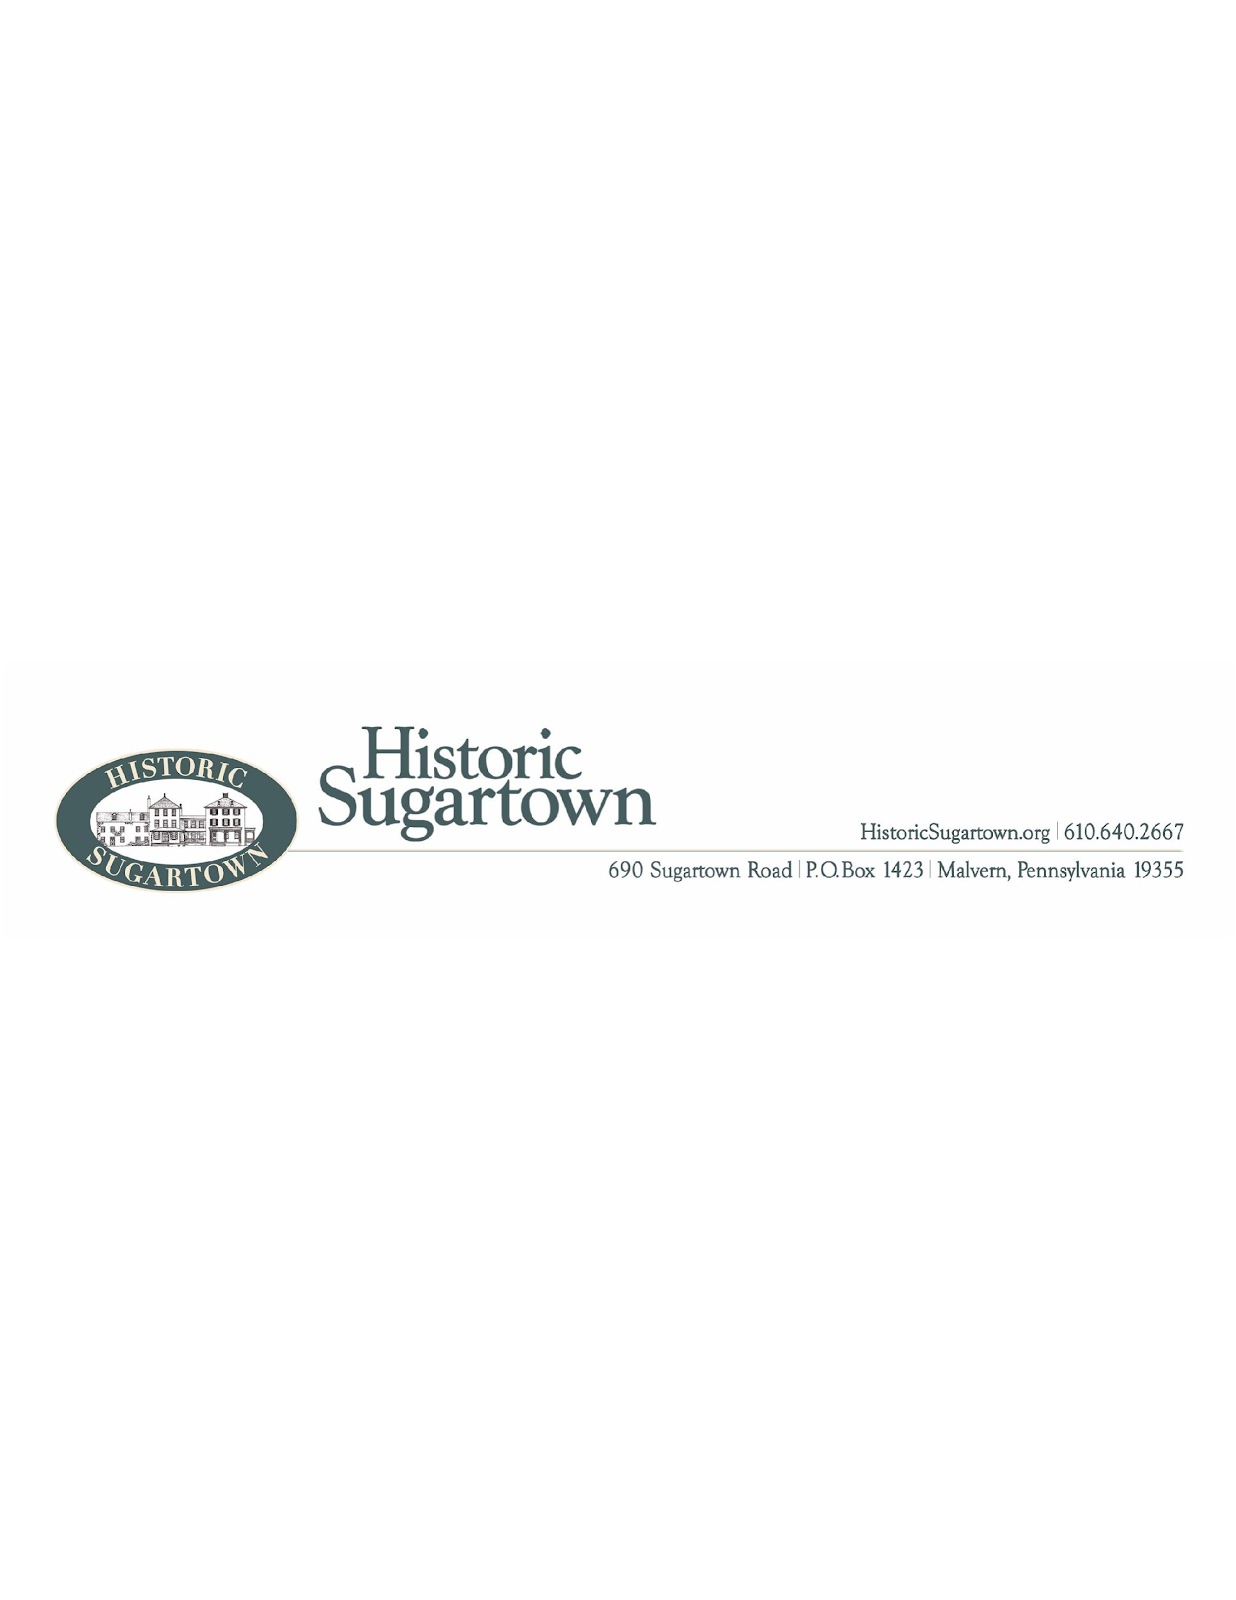 Macintosh HD:Users:HistoricSugartown:Documents:Finance:_HSI Letterhead to hsi.pdf